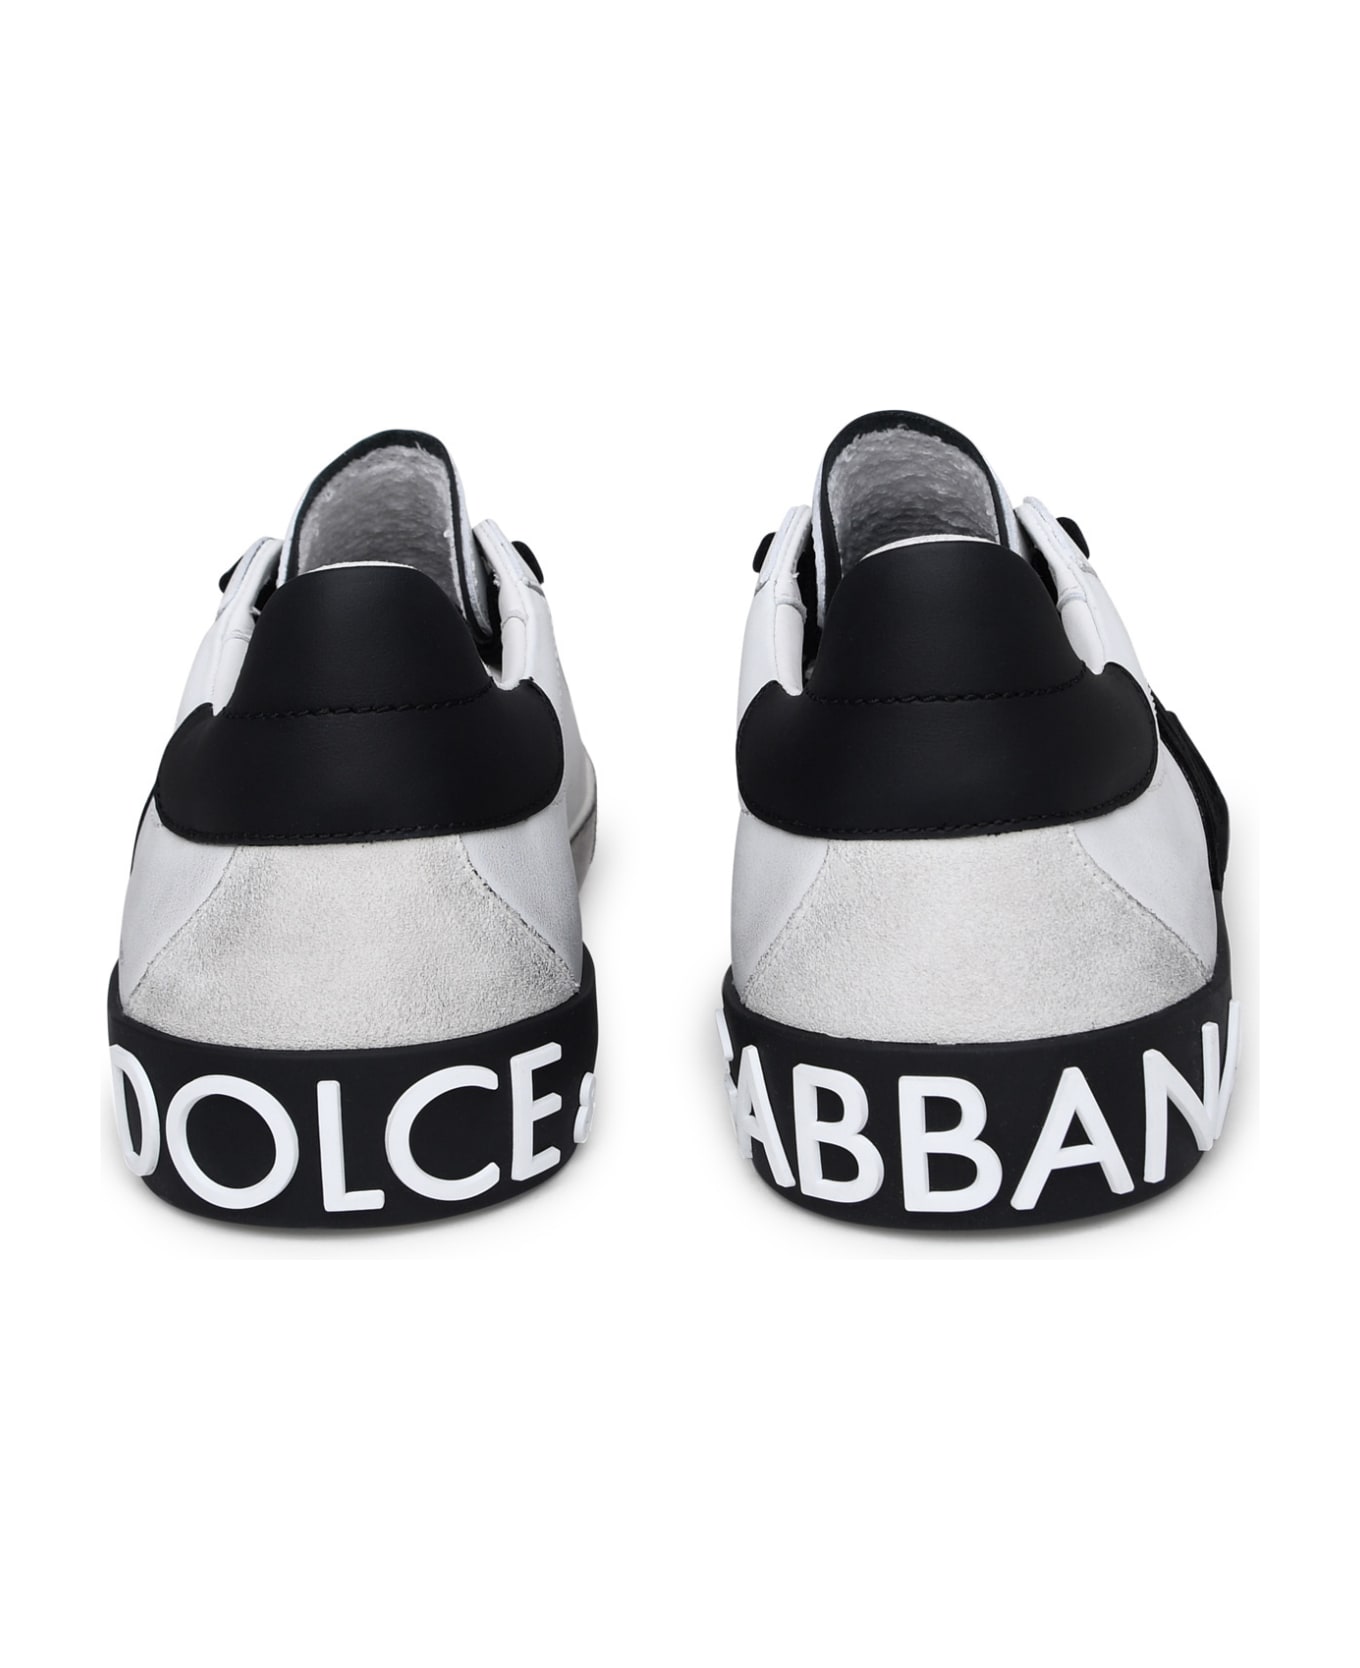 Dolce & Gabbana White Leather Sneakers - BIANCO/NERO